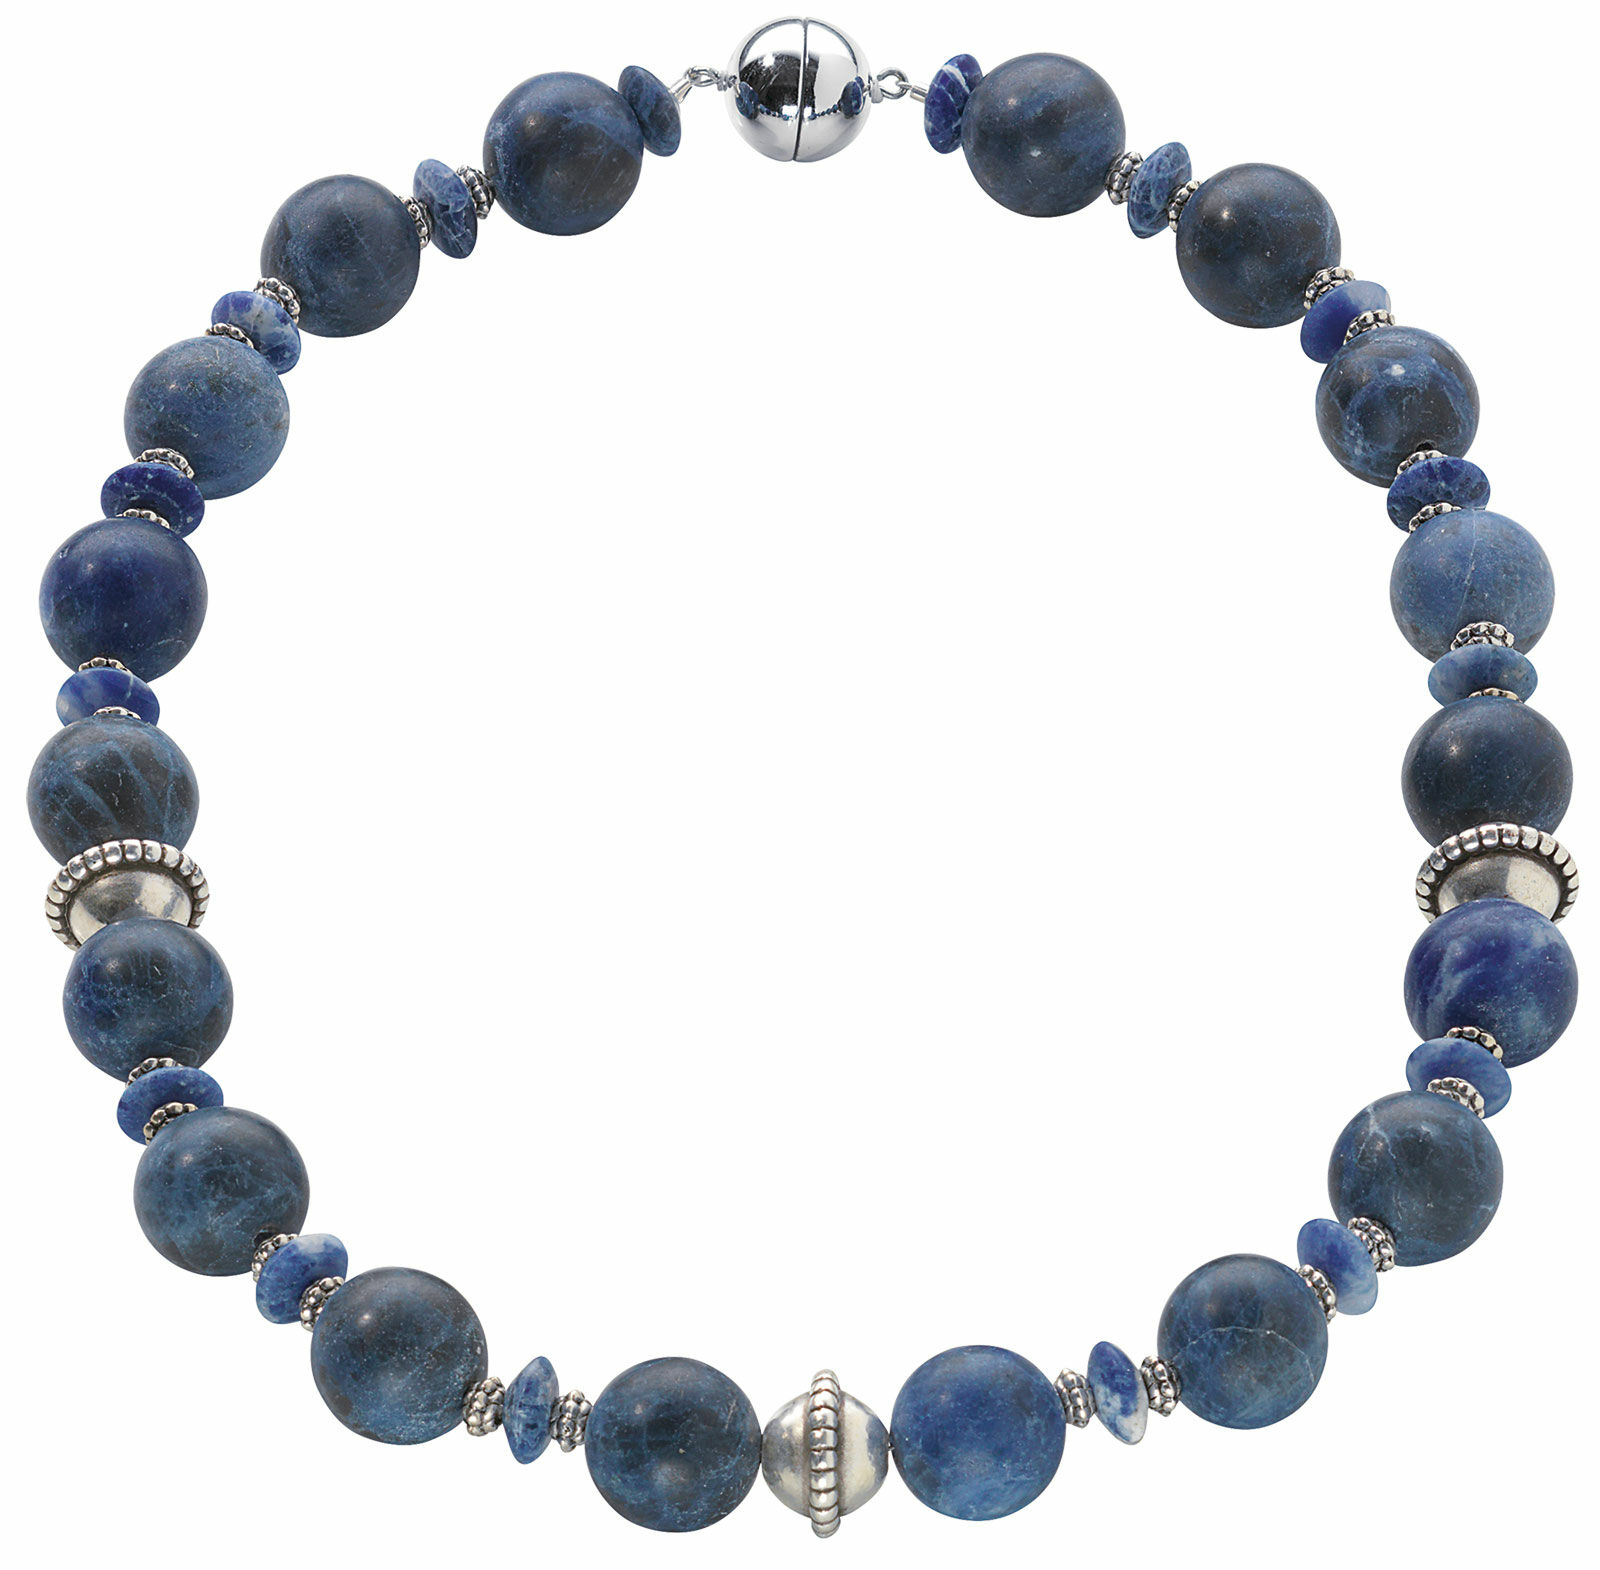 Collier de perles "Dark Blue" (bleu foncé)